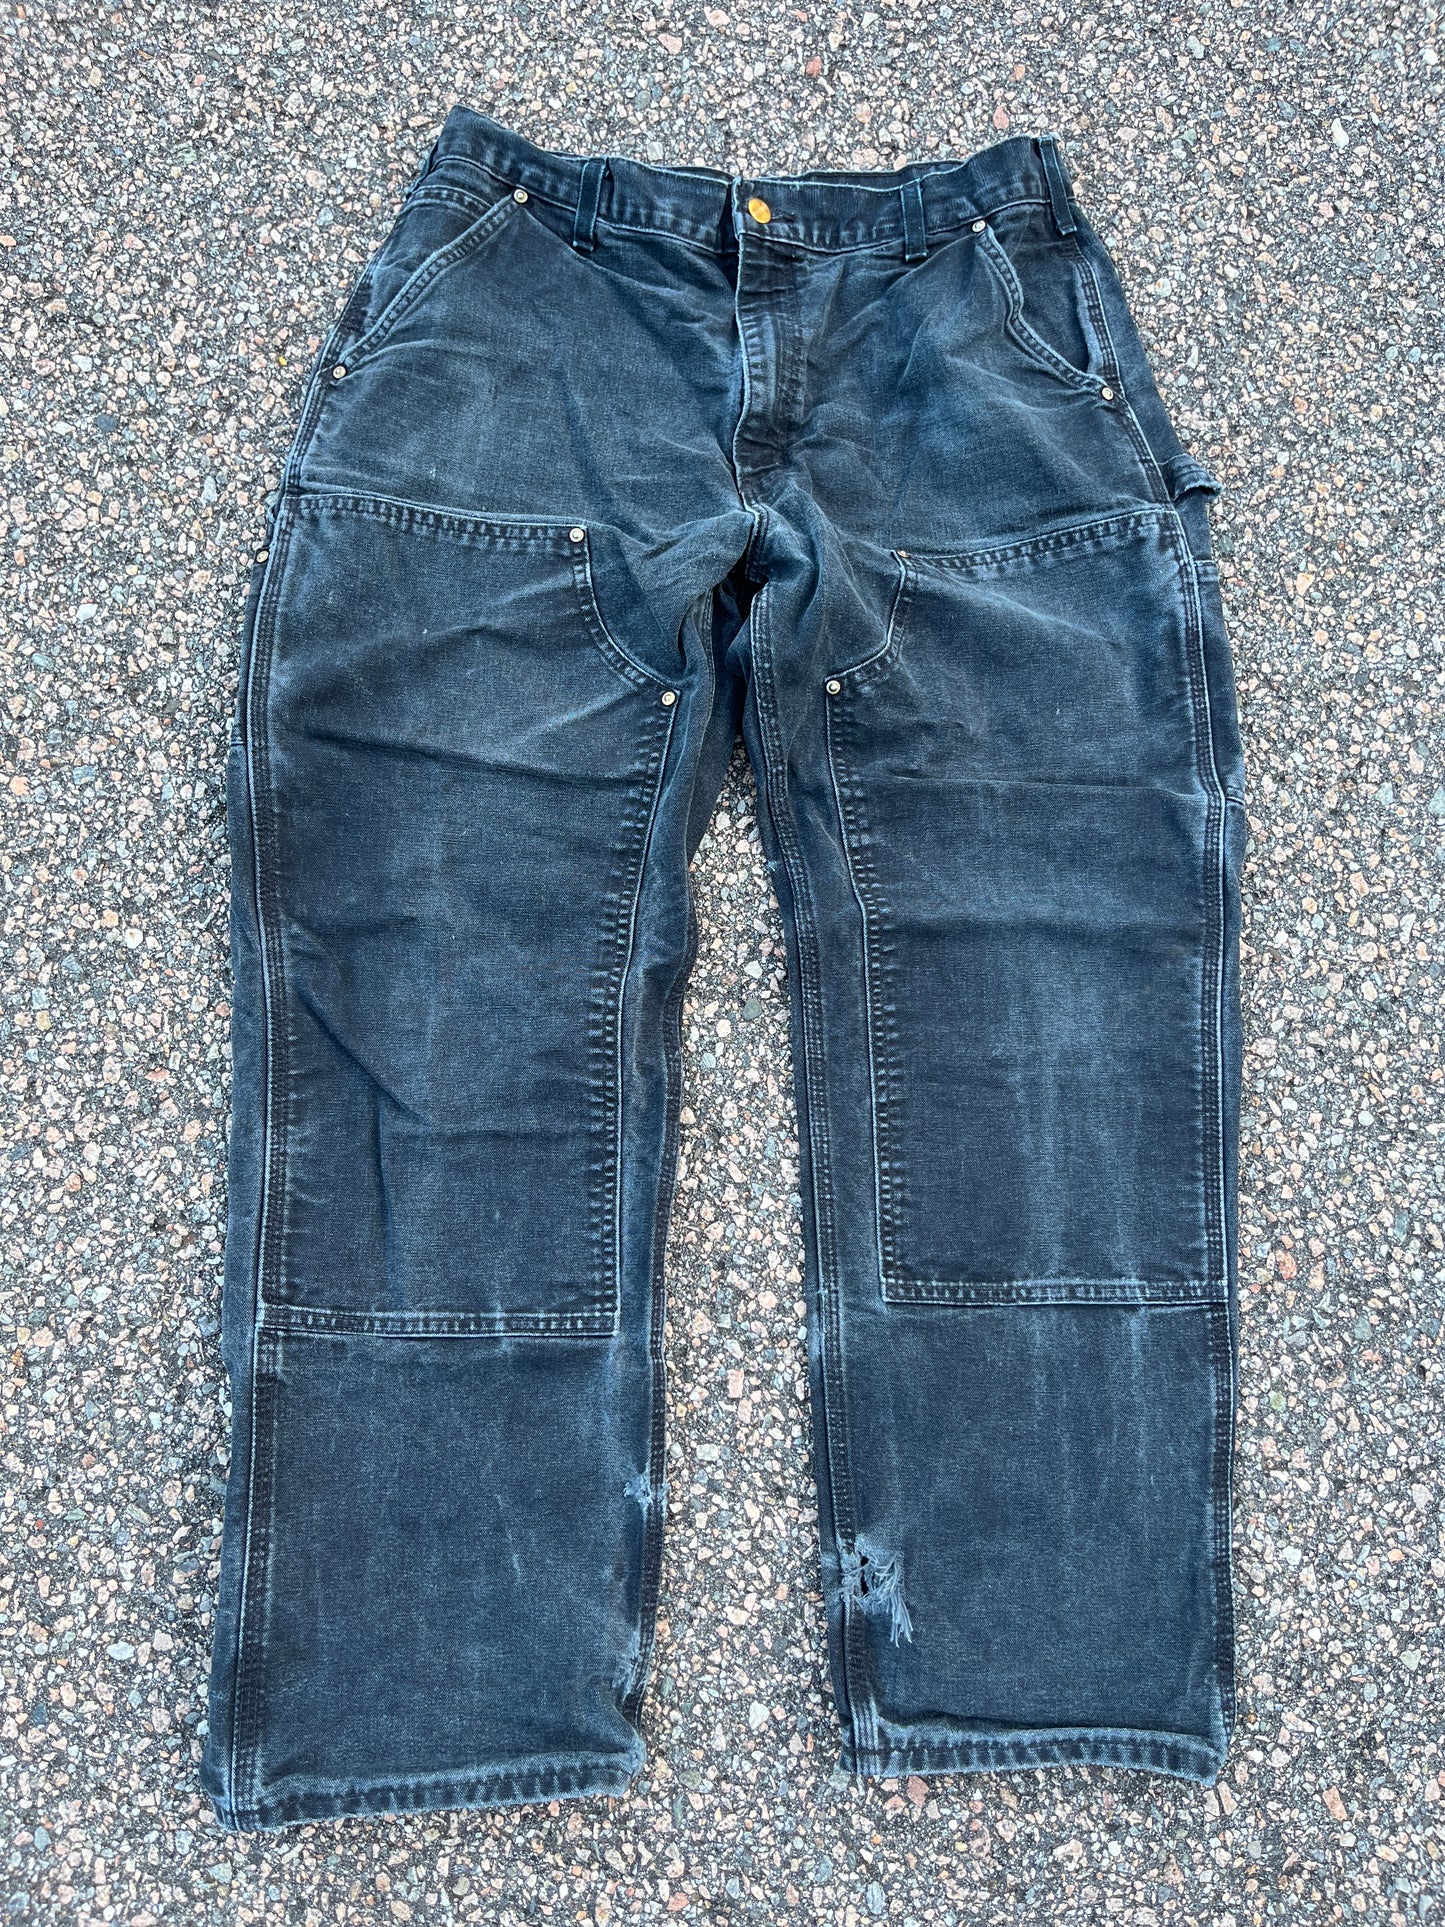 Faded Black Carhartt Double Knee Pants - 34 x 29